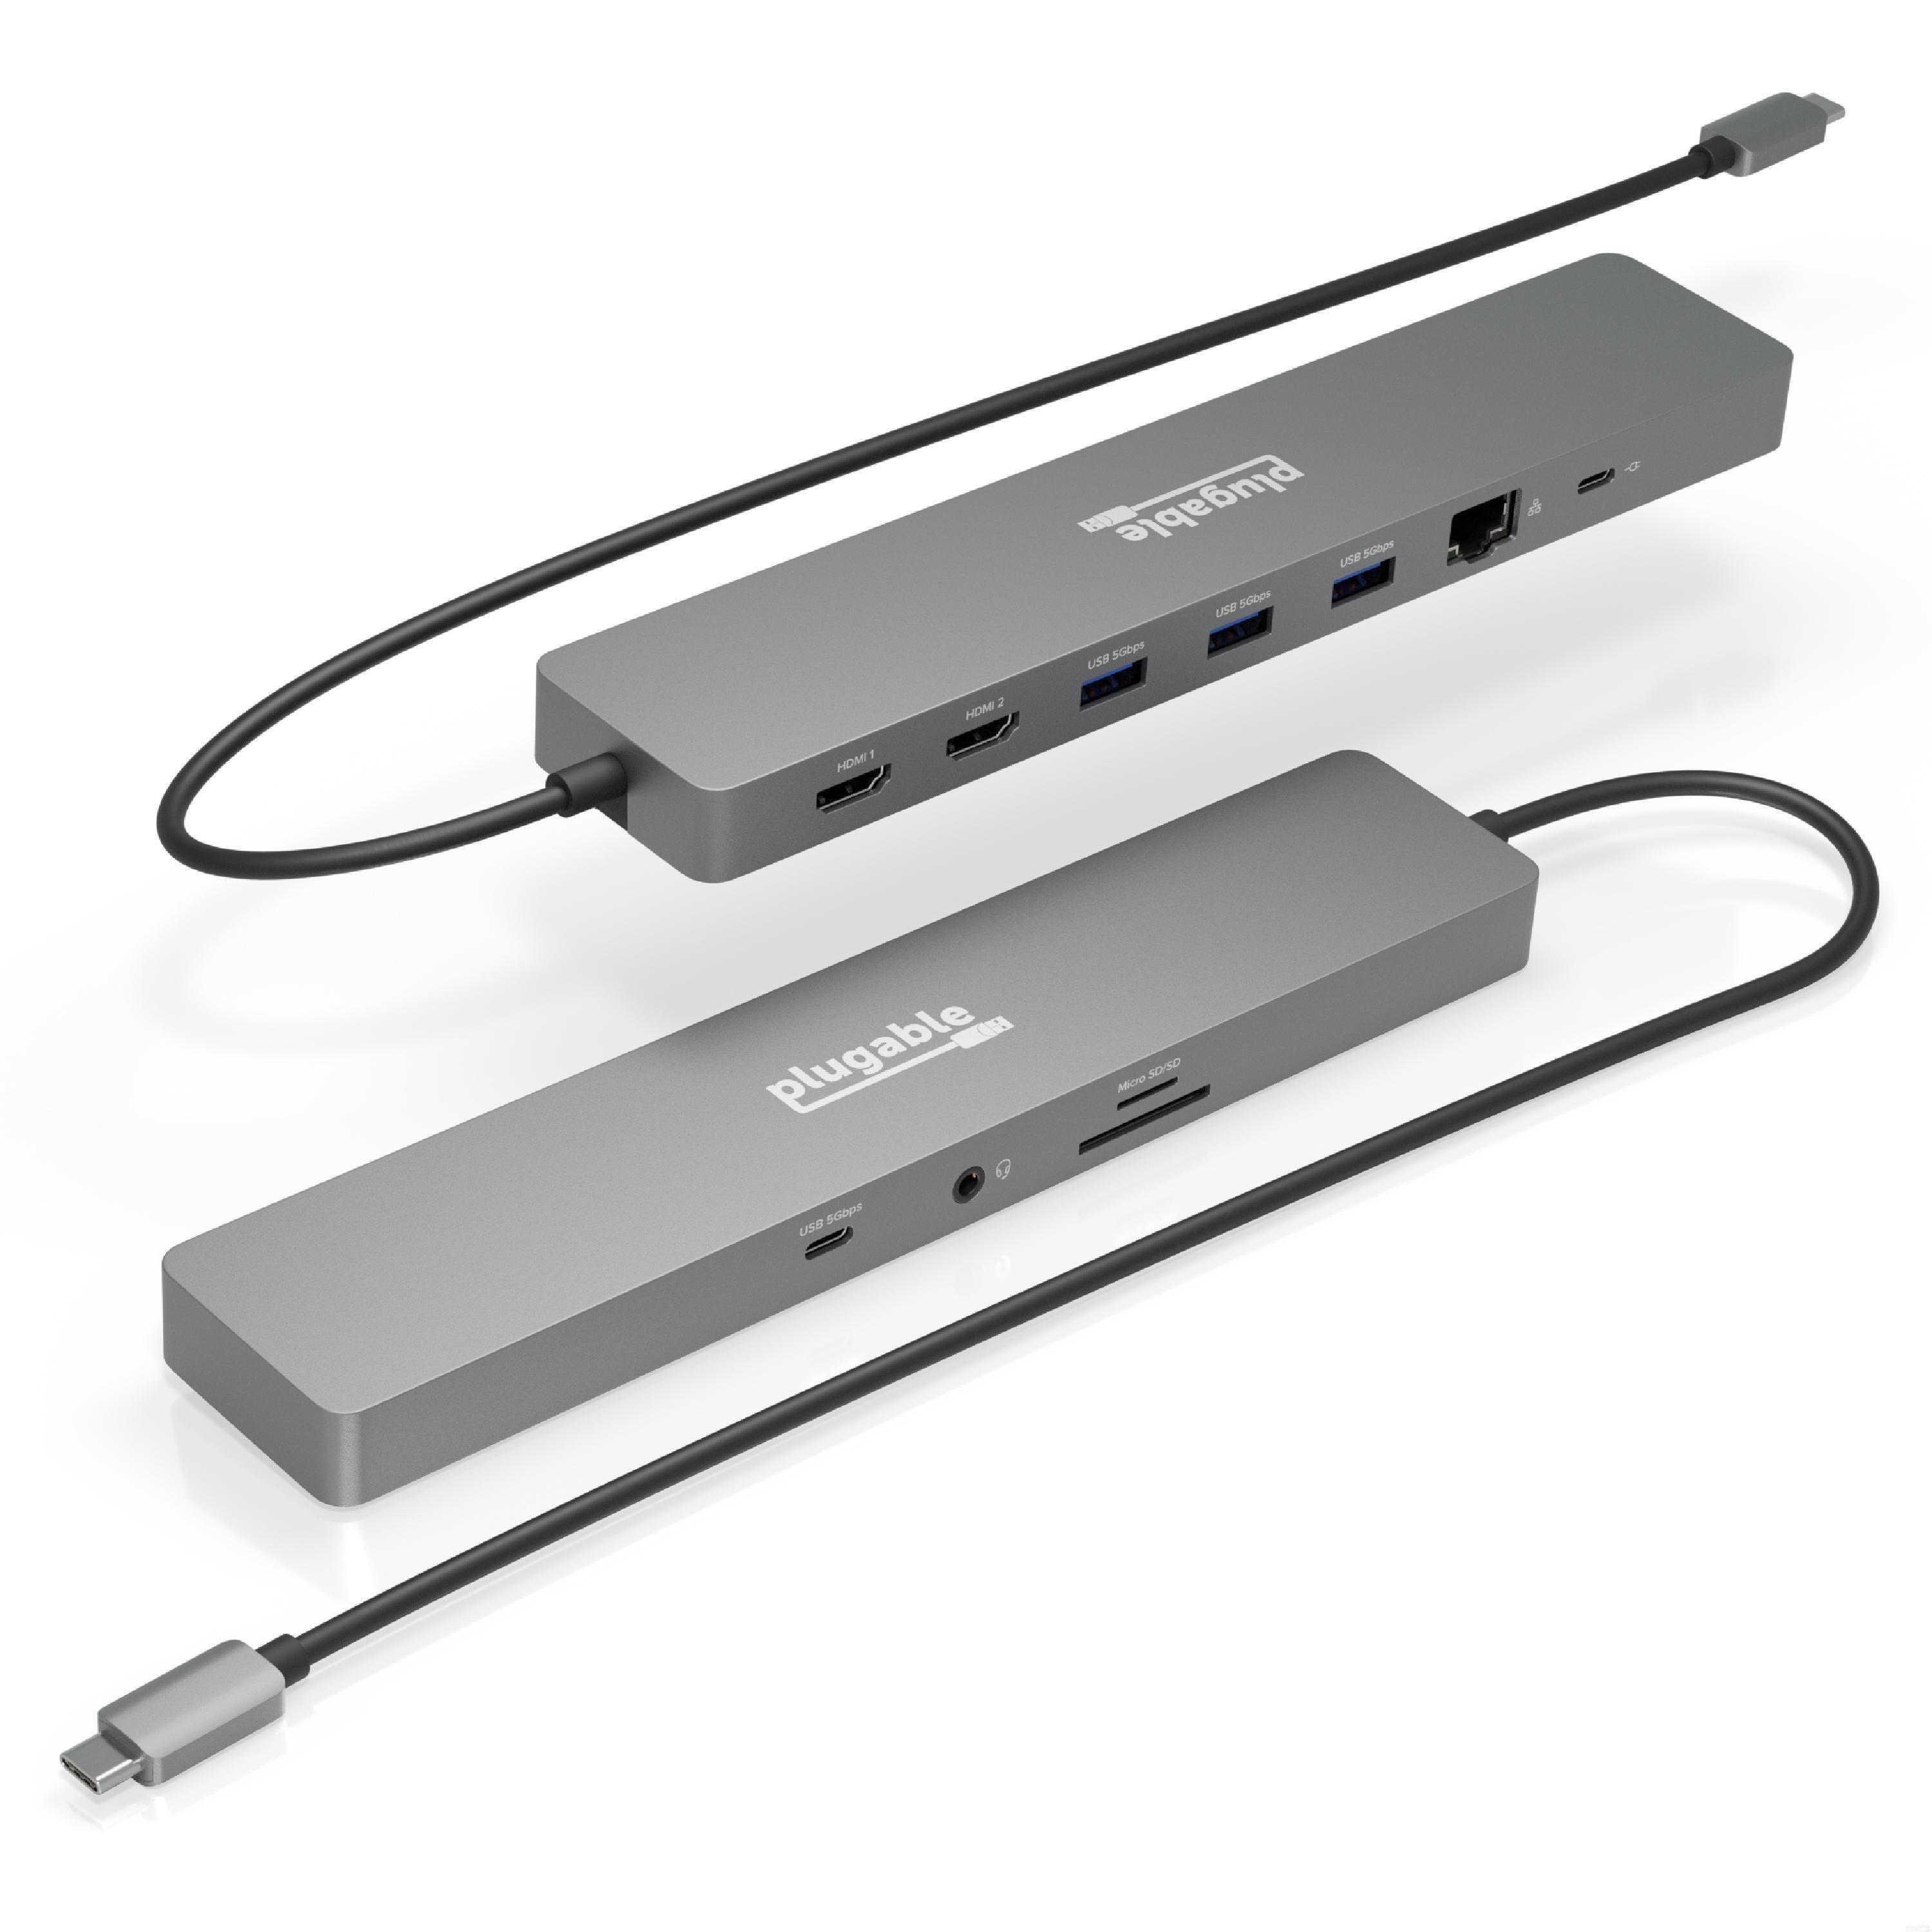 Plugable USB-C Ethernet – Plugable Technologies